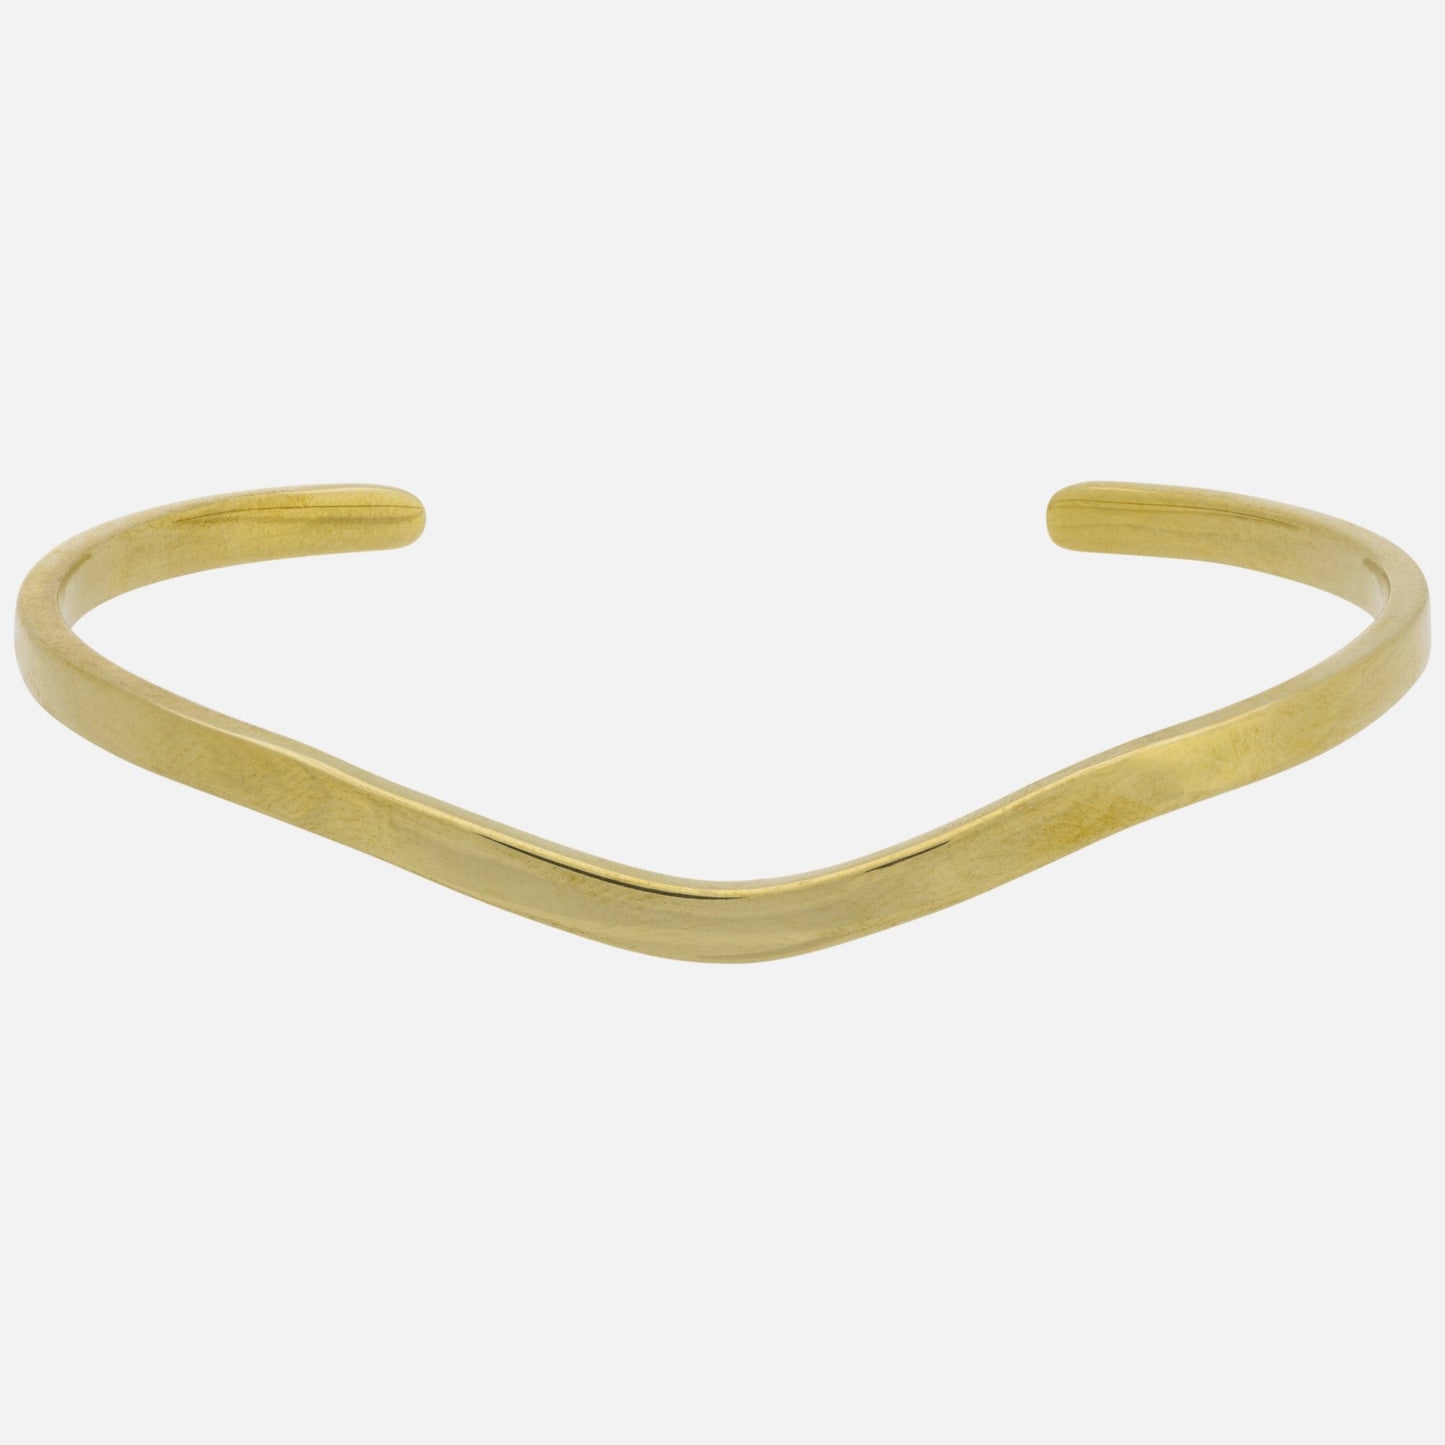 Hammered Curved Brass Cuff Bracelet